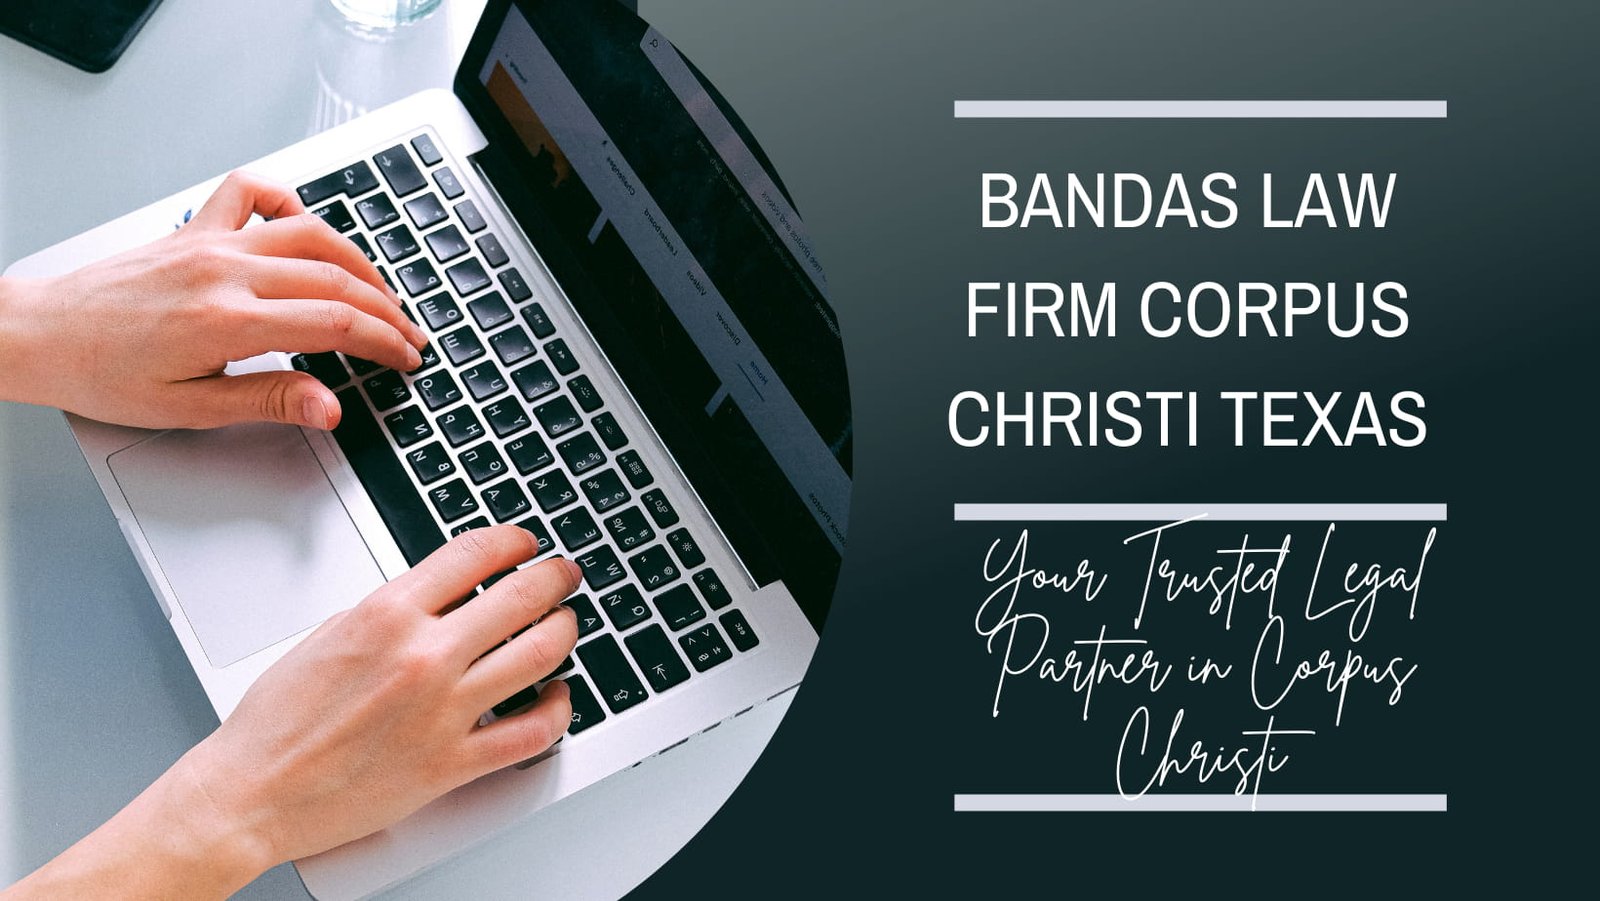 Bandas Law Firm Corpus Christi Texas: Your Trusted Legal Partner in Corpus Christi